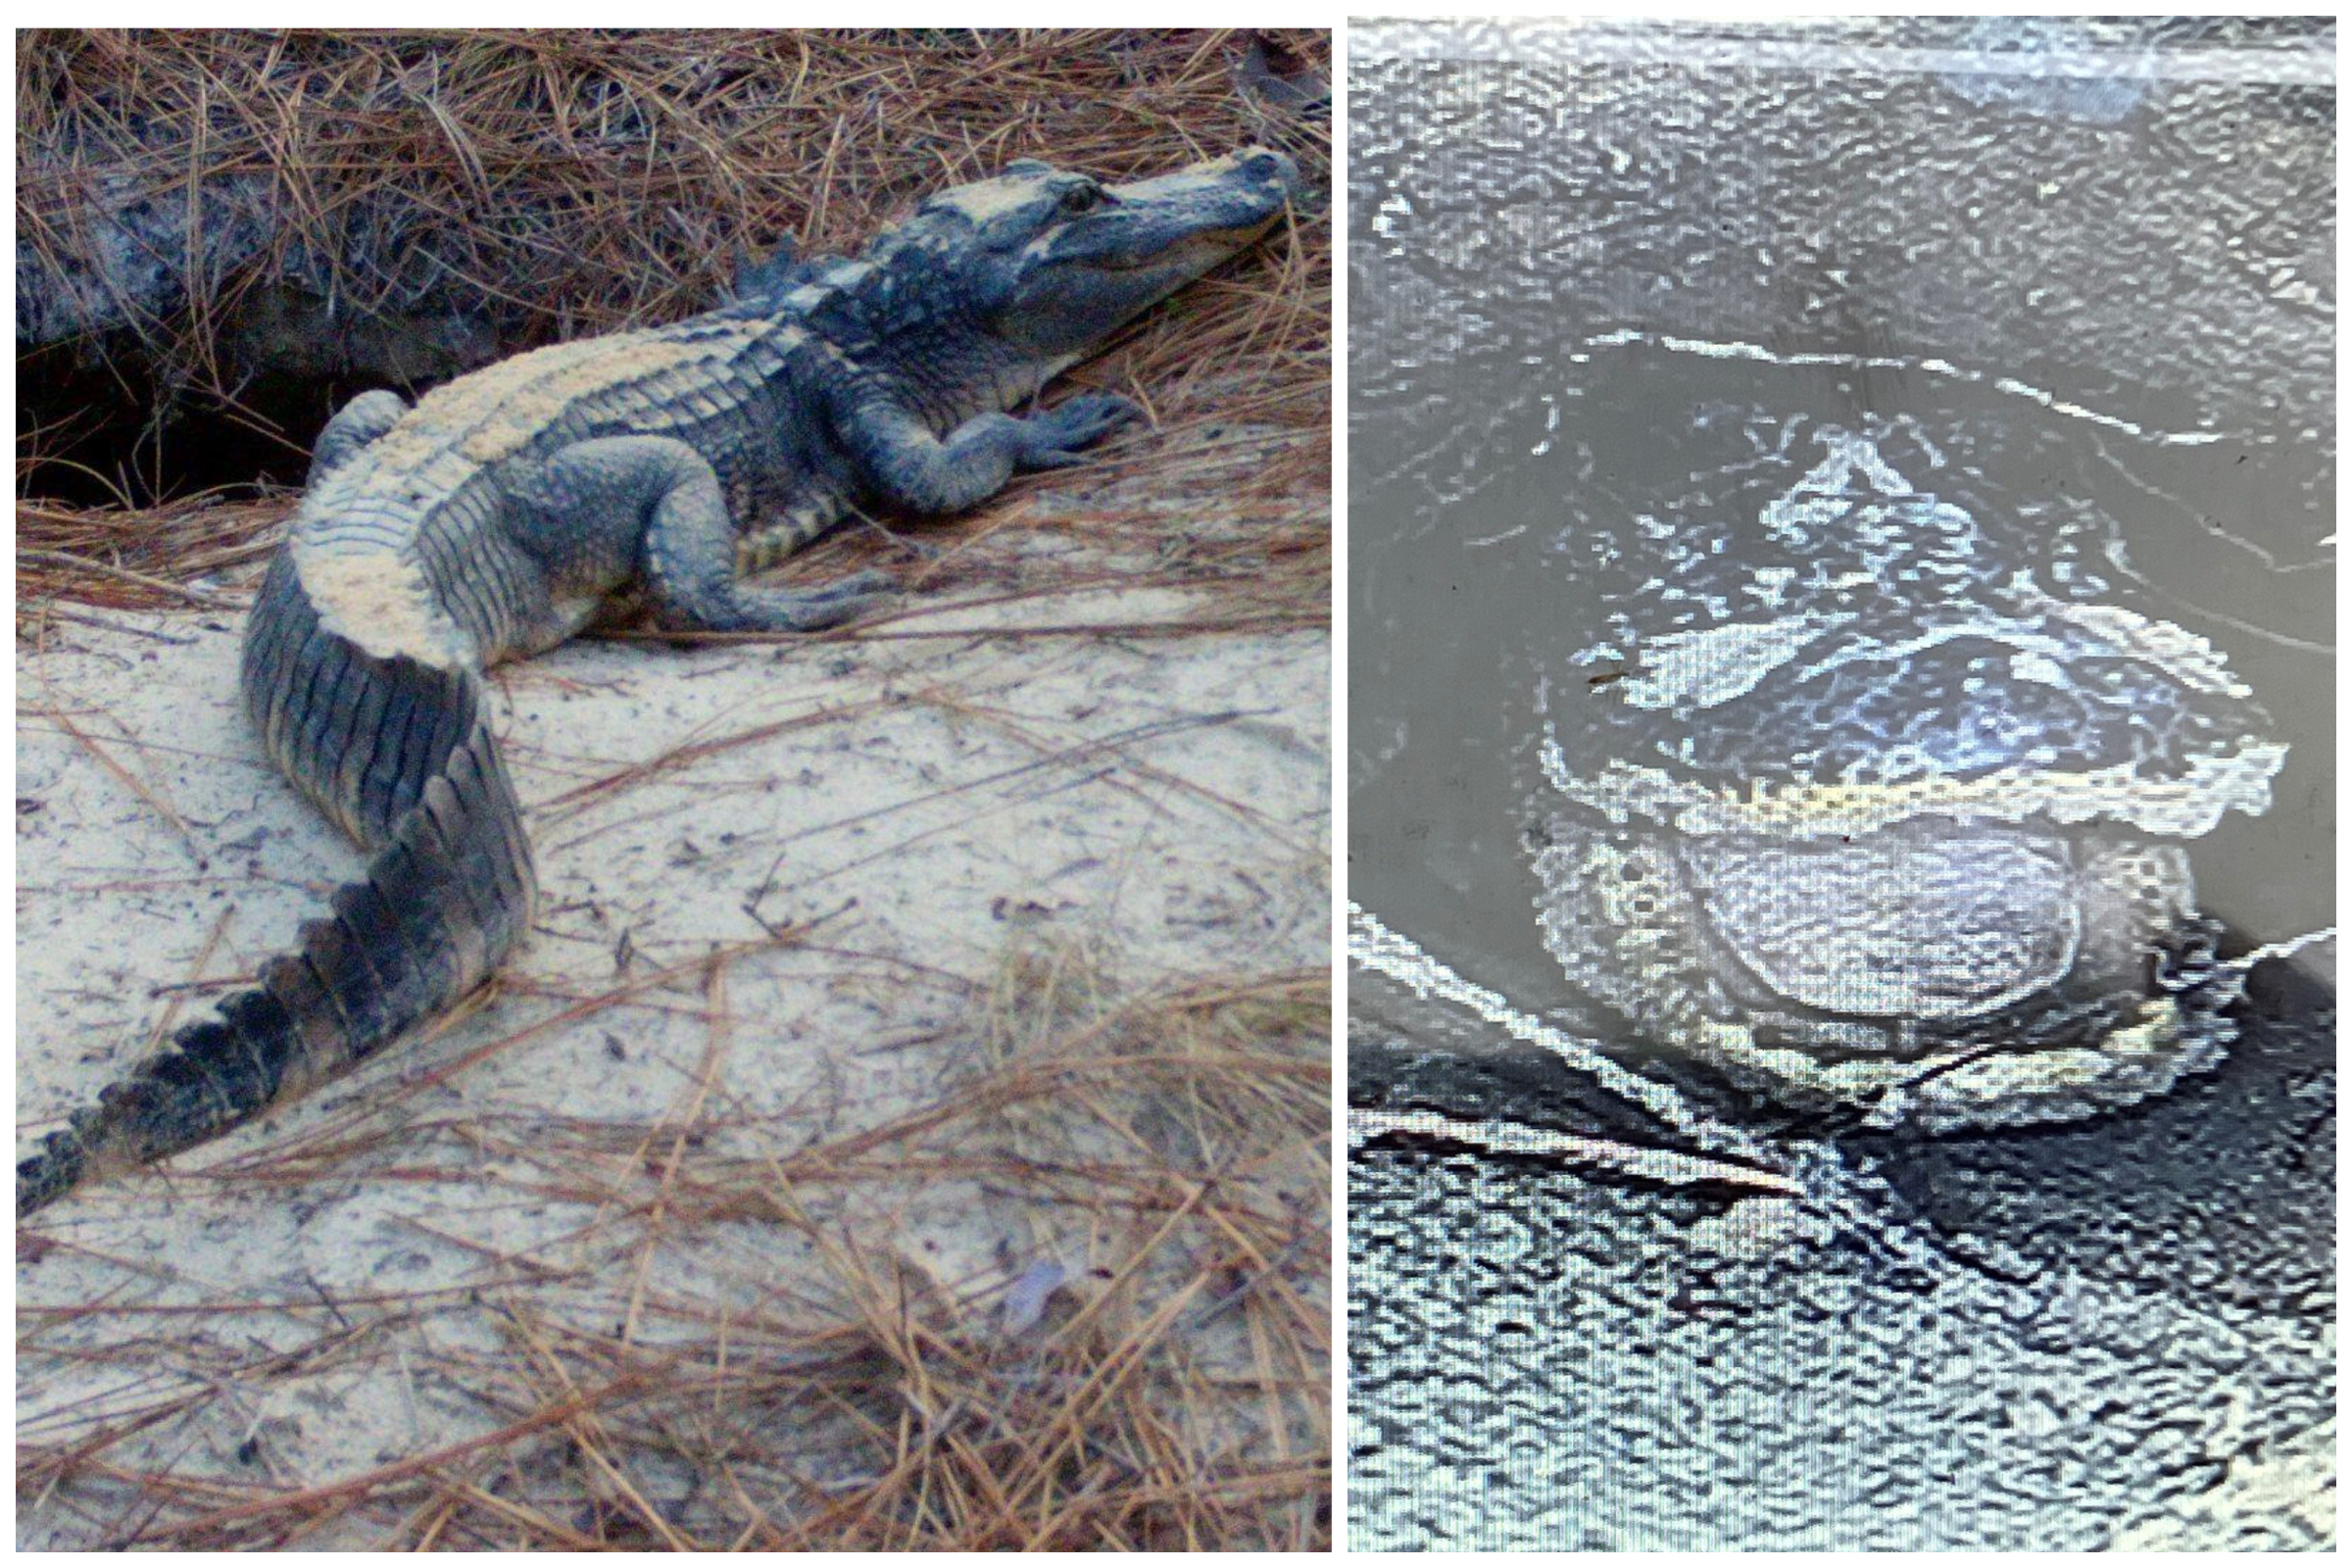 alligator found tortoise burrow